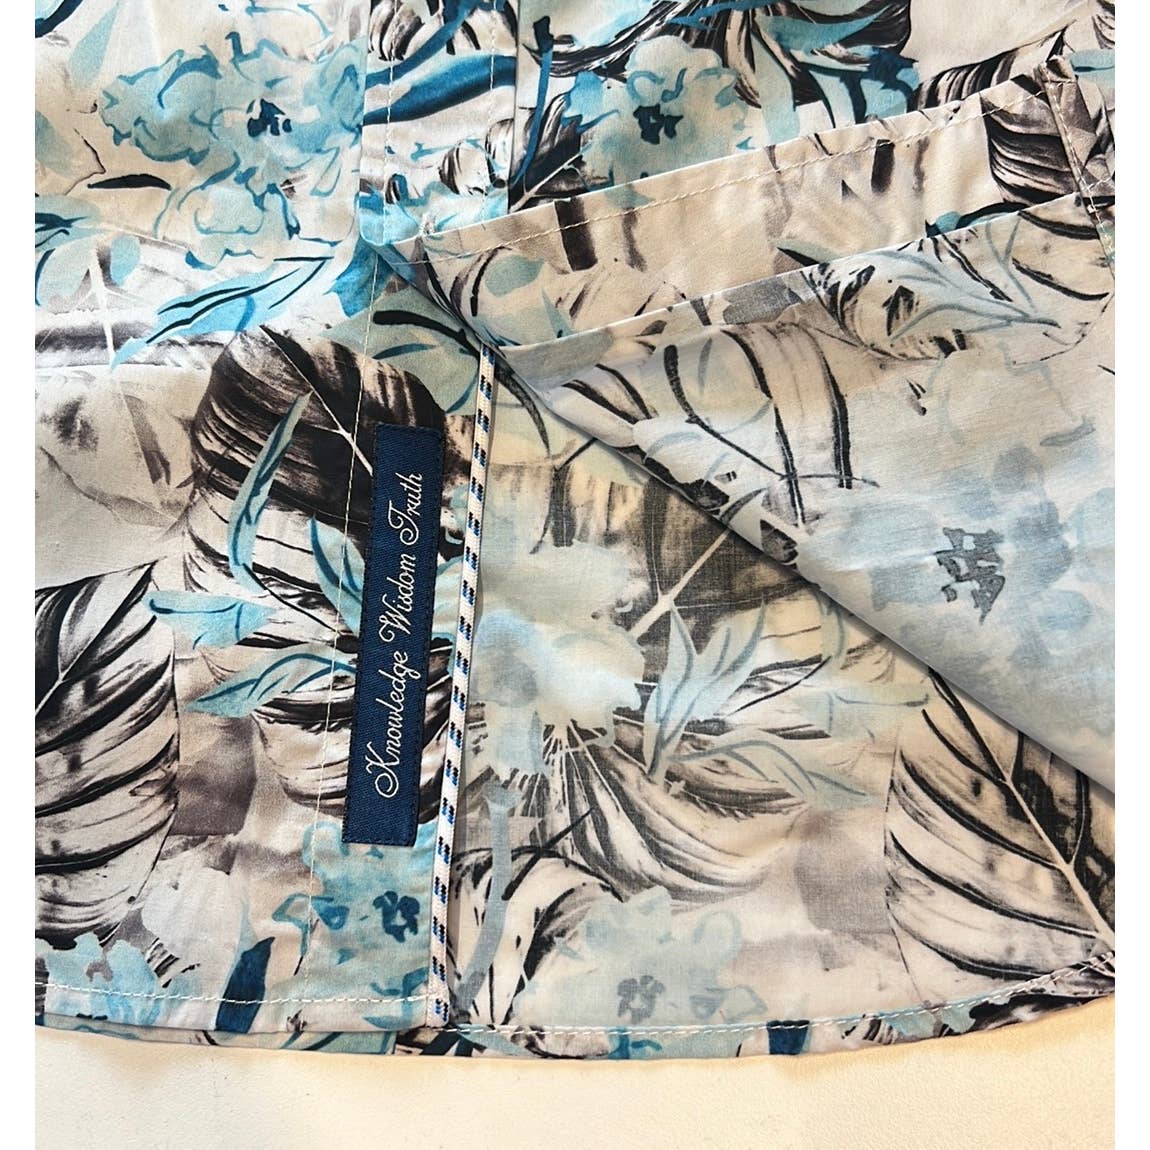 Robert Graham Men's "Lely Villa" Button Down Shirt, Blue/Black/White Floral